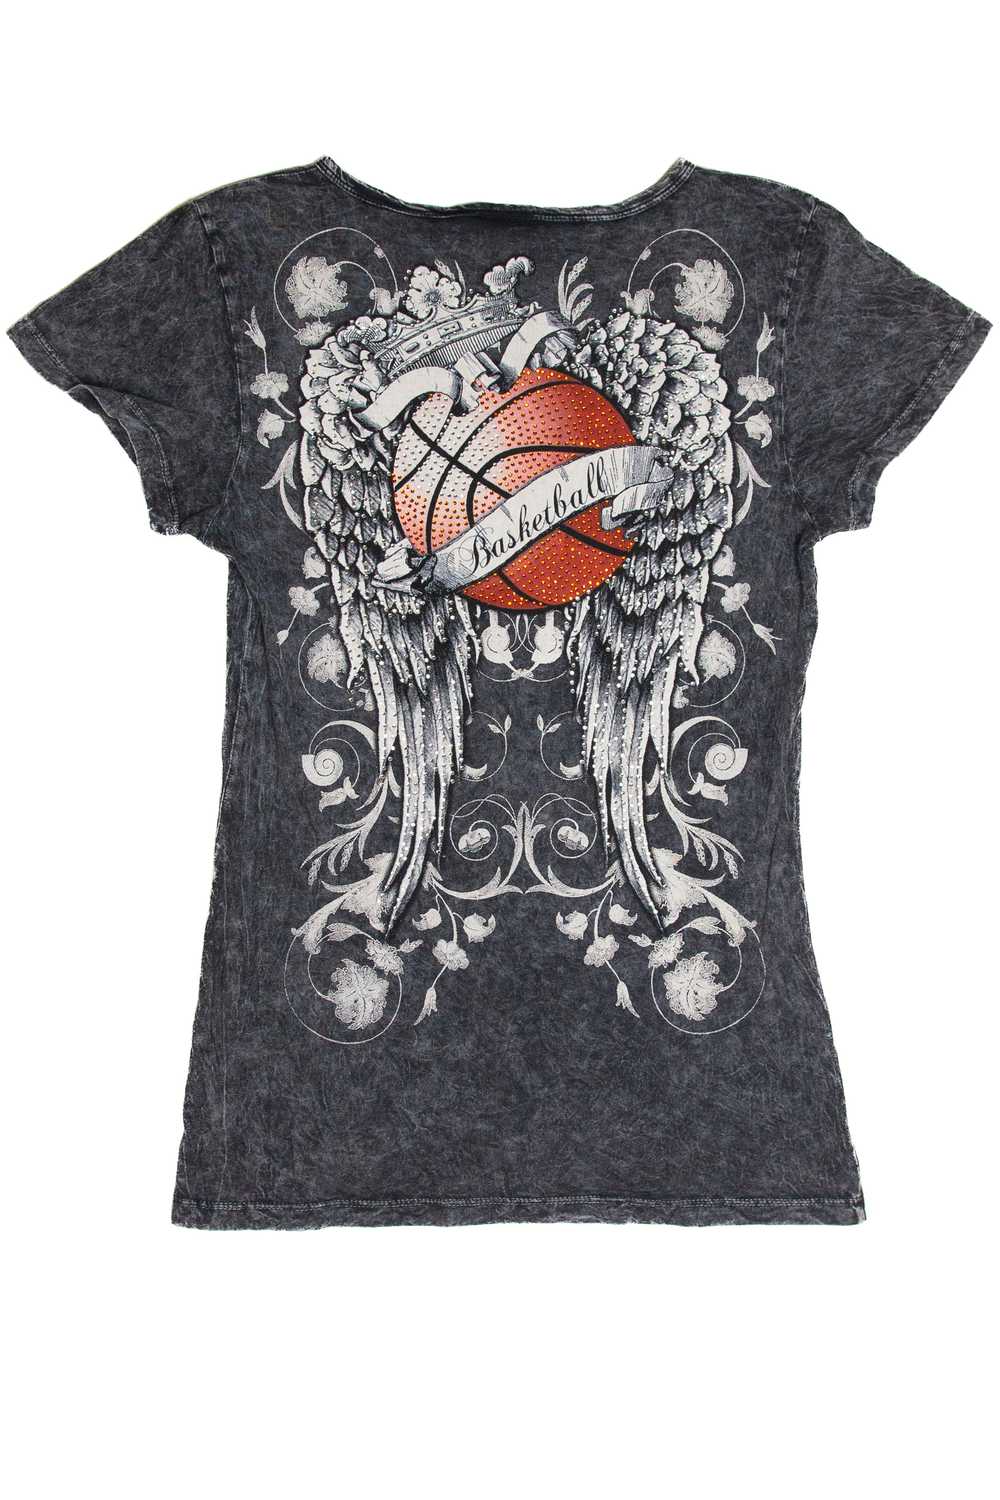 Basketball Rhinestone T-Shirt - image 3